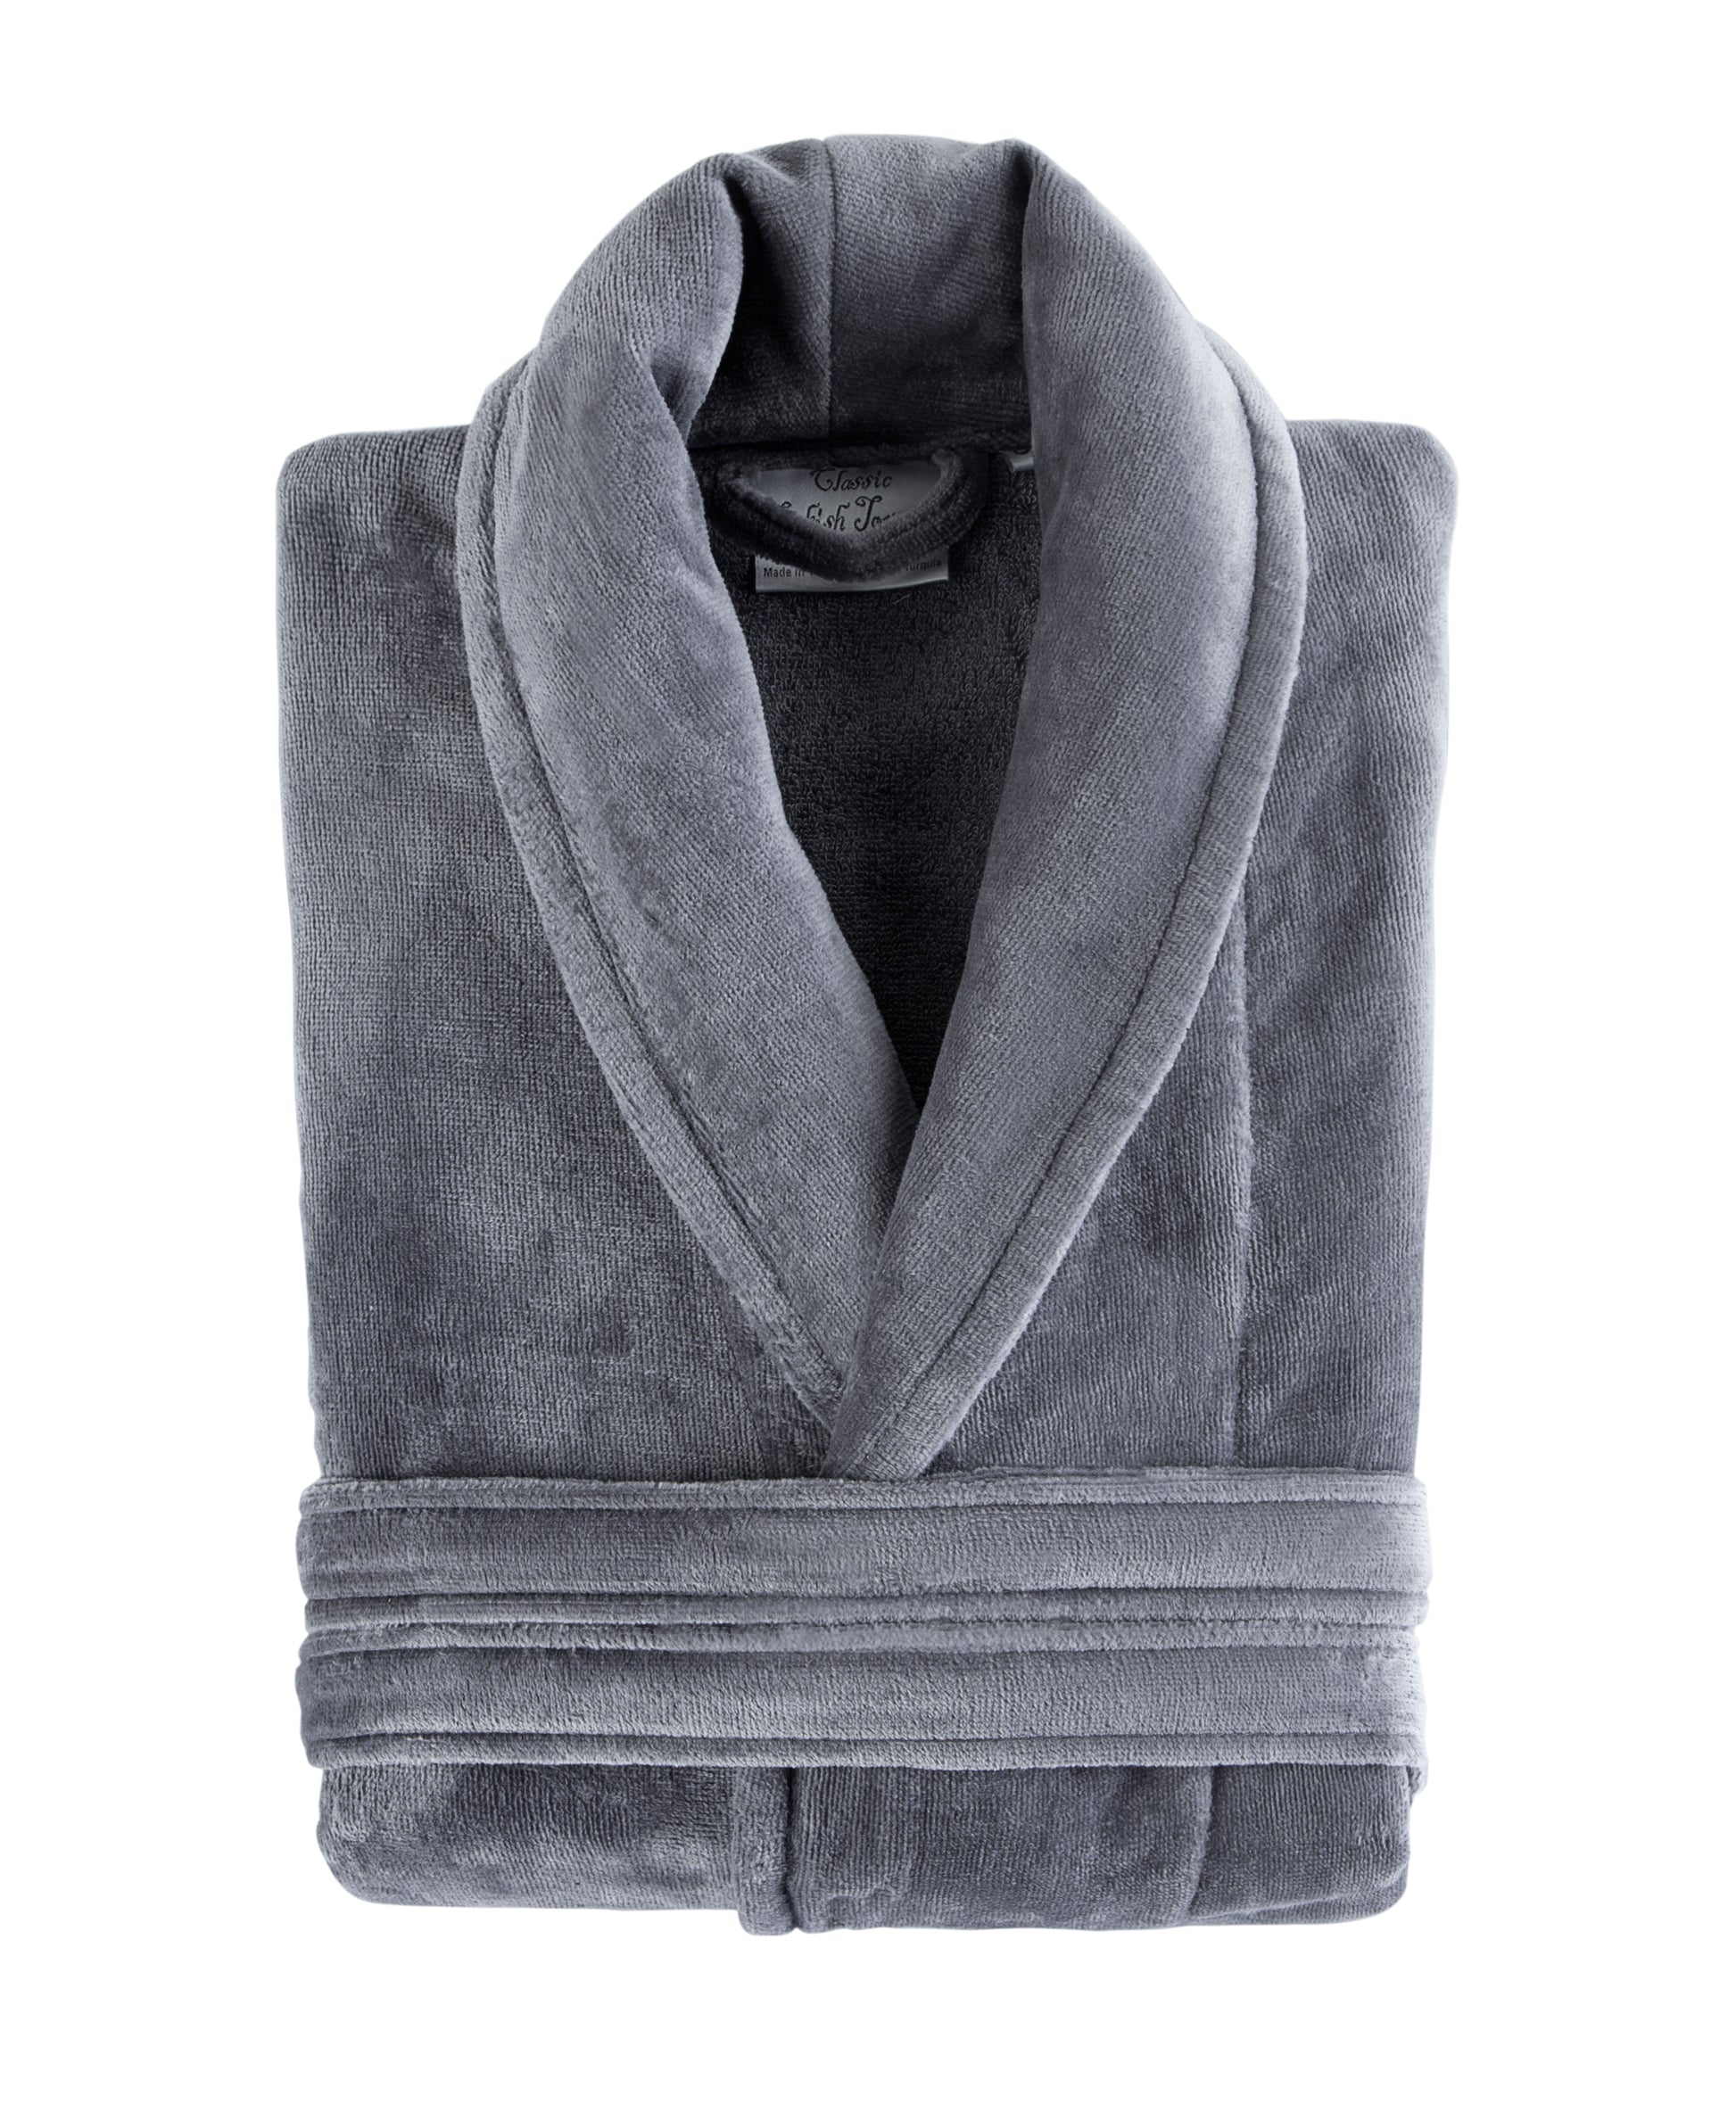 Velour Shawl Collar Luxury Turkish Cotton Bathrobe One Big Size Fits All - Classic Turkish Towels